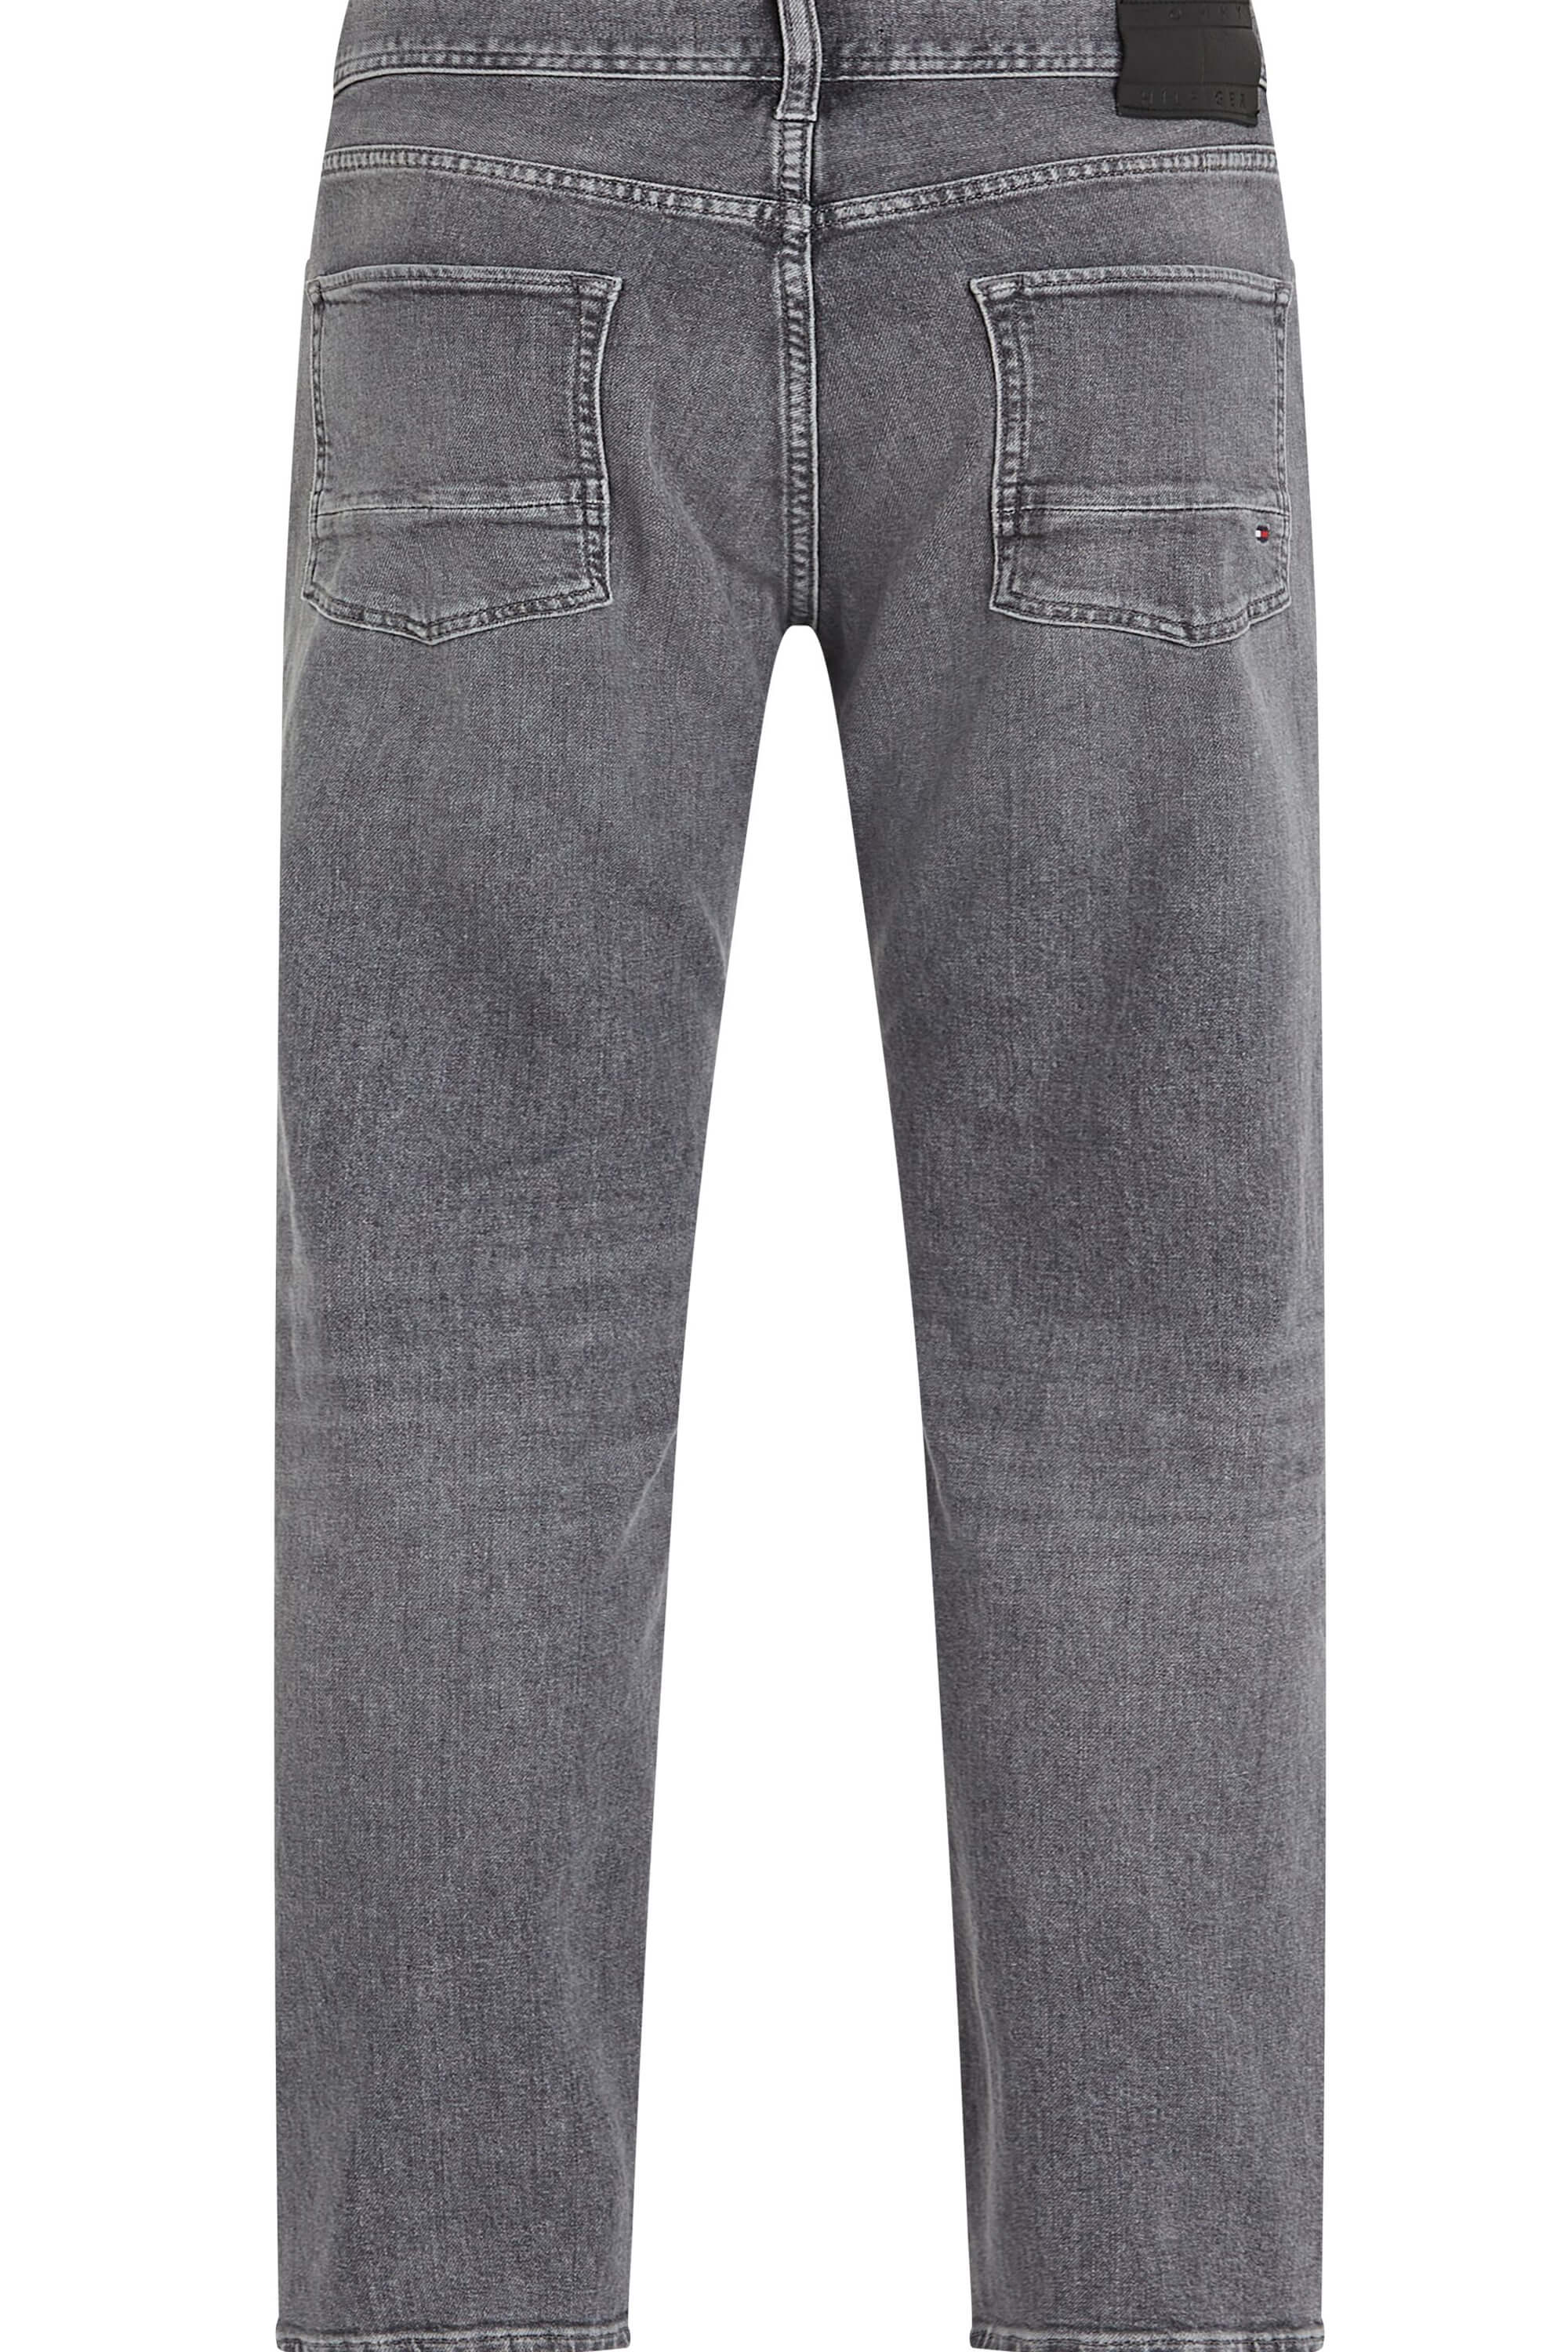 Tommy Hilfiger Straight Denton Jeans Avas Grey